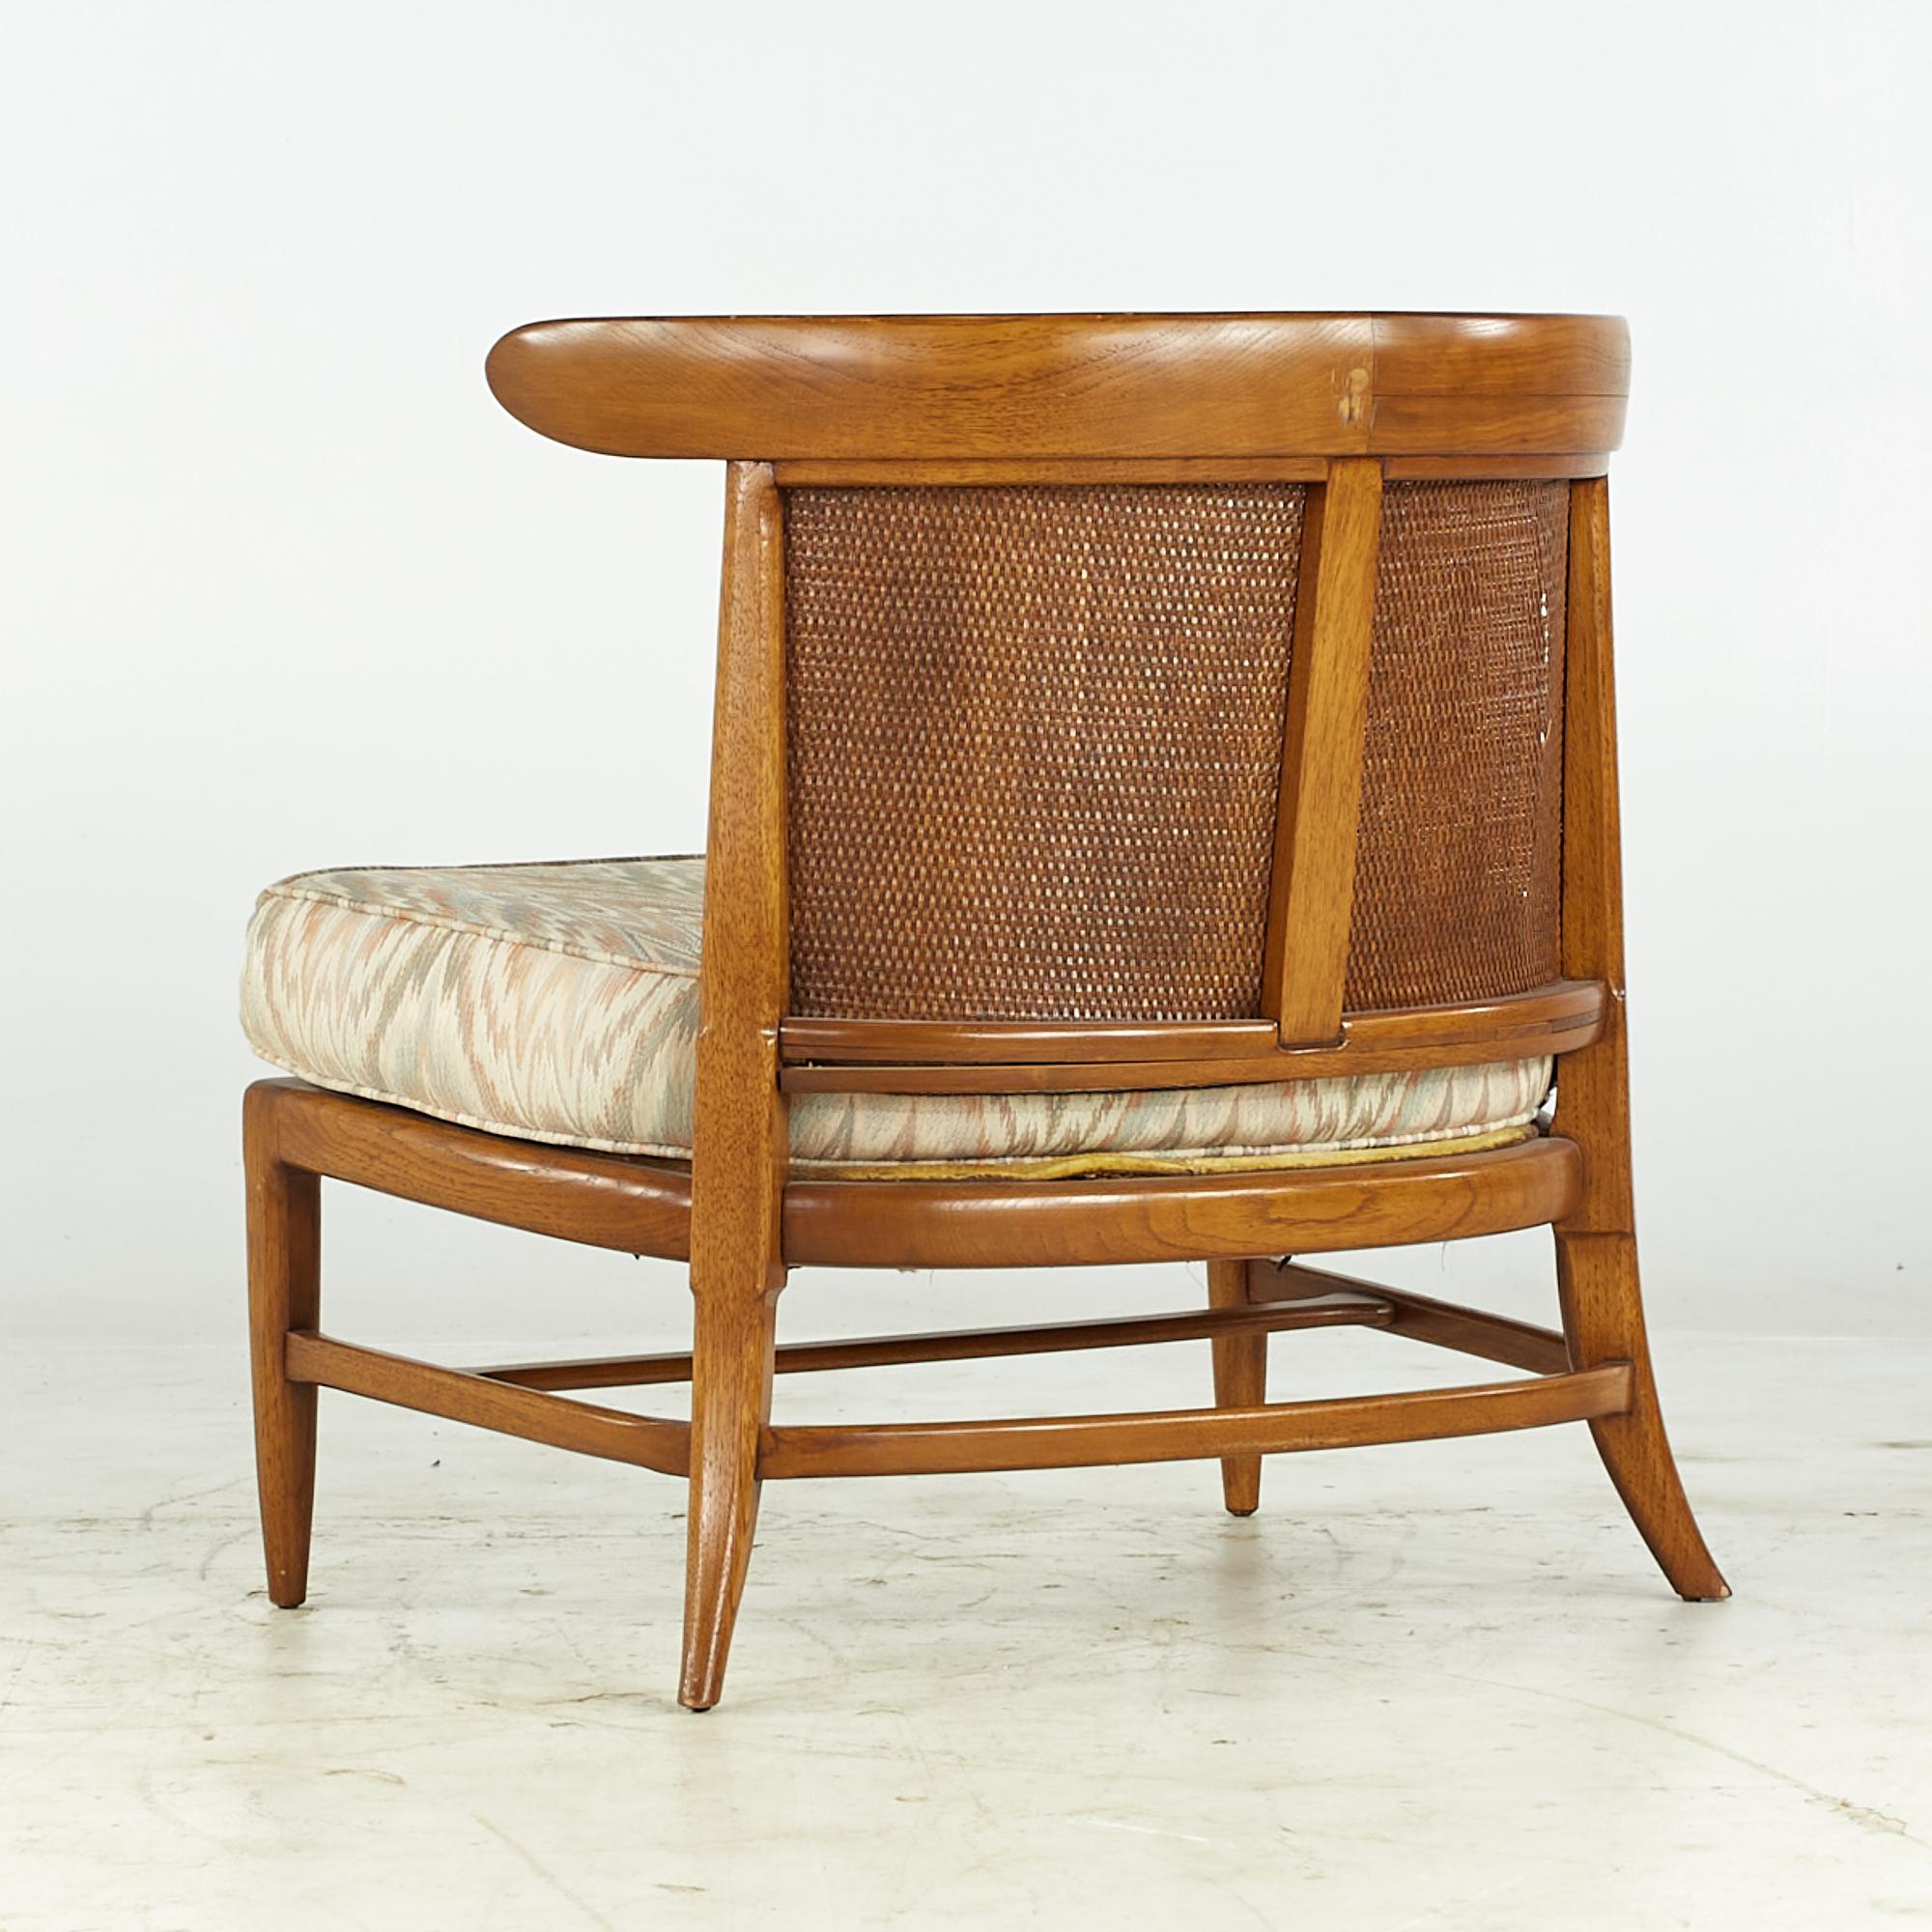 John Lubberts Lambert Mulder Tomlinson MCM Cane and Walnut Slipper Chair, Pair For Sale 2